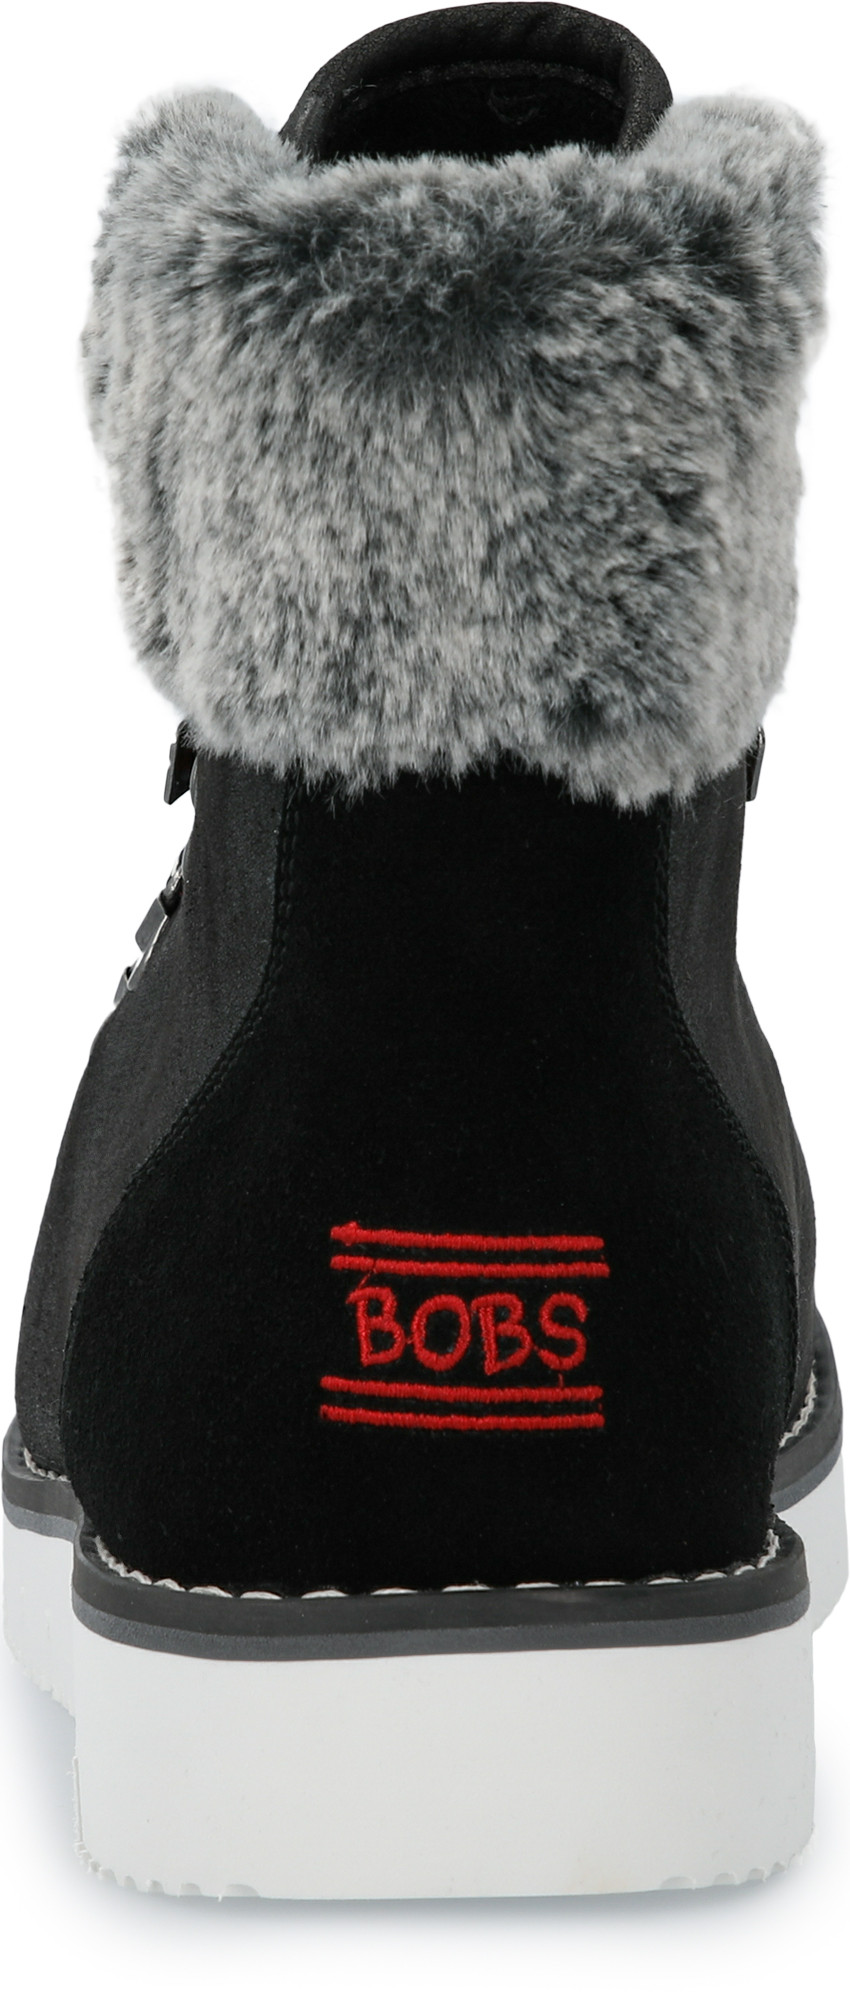 Ботинки женские Skechers Bobs Rocky